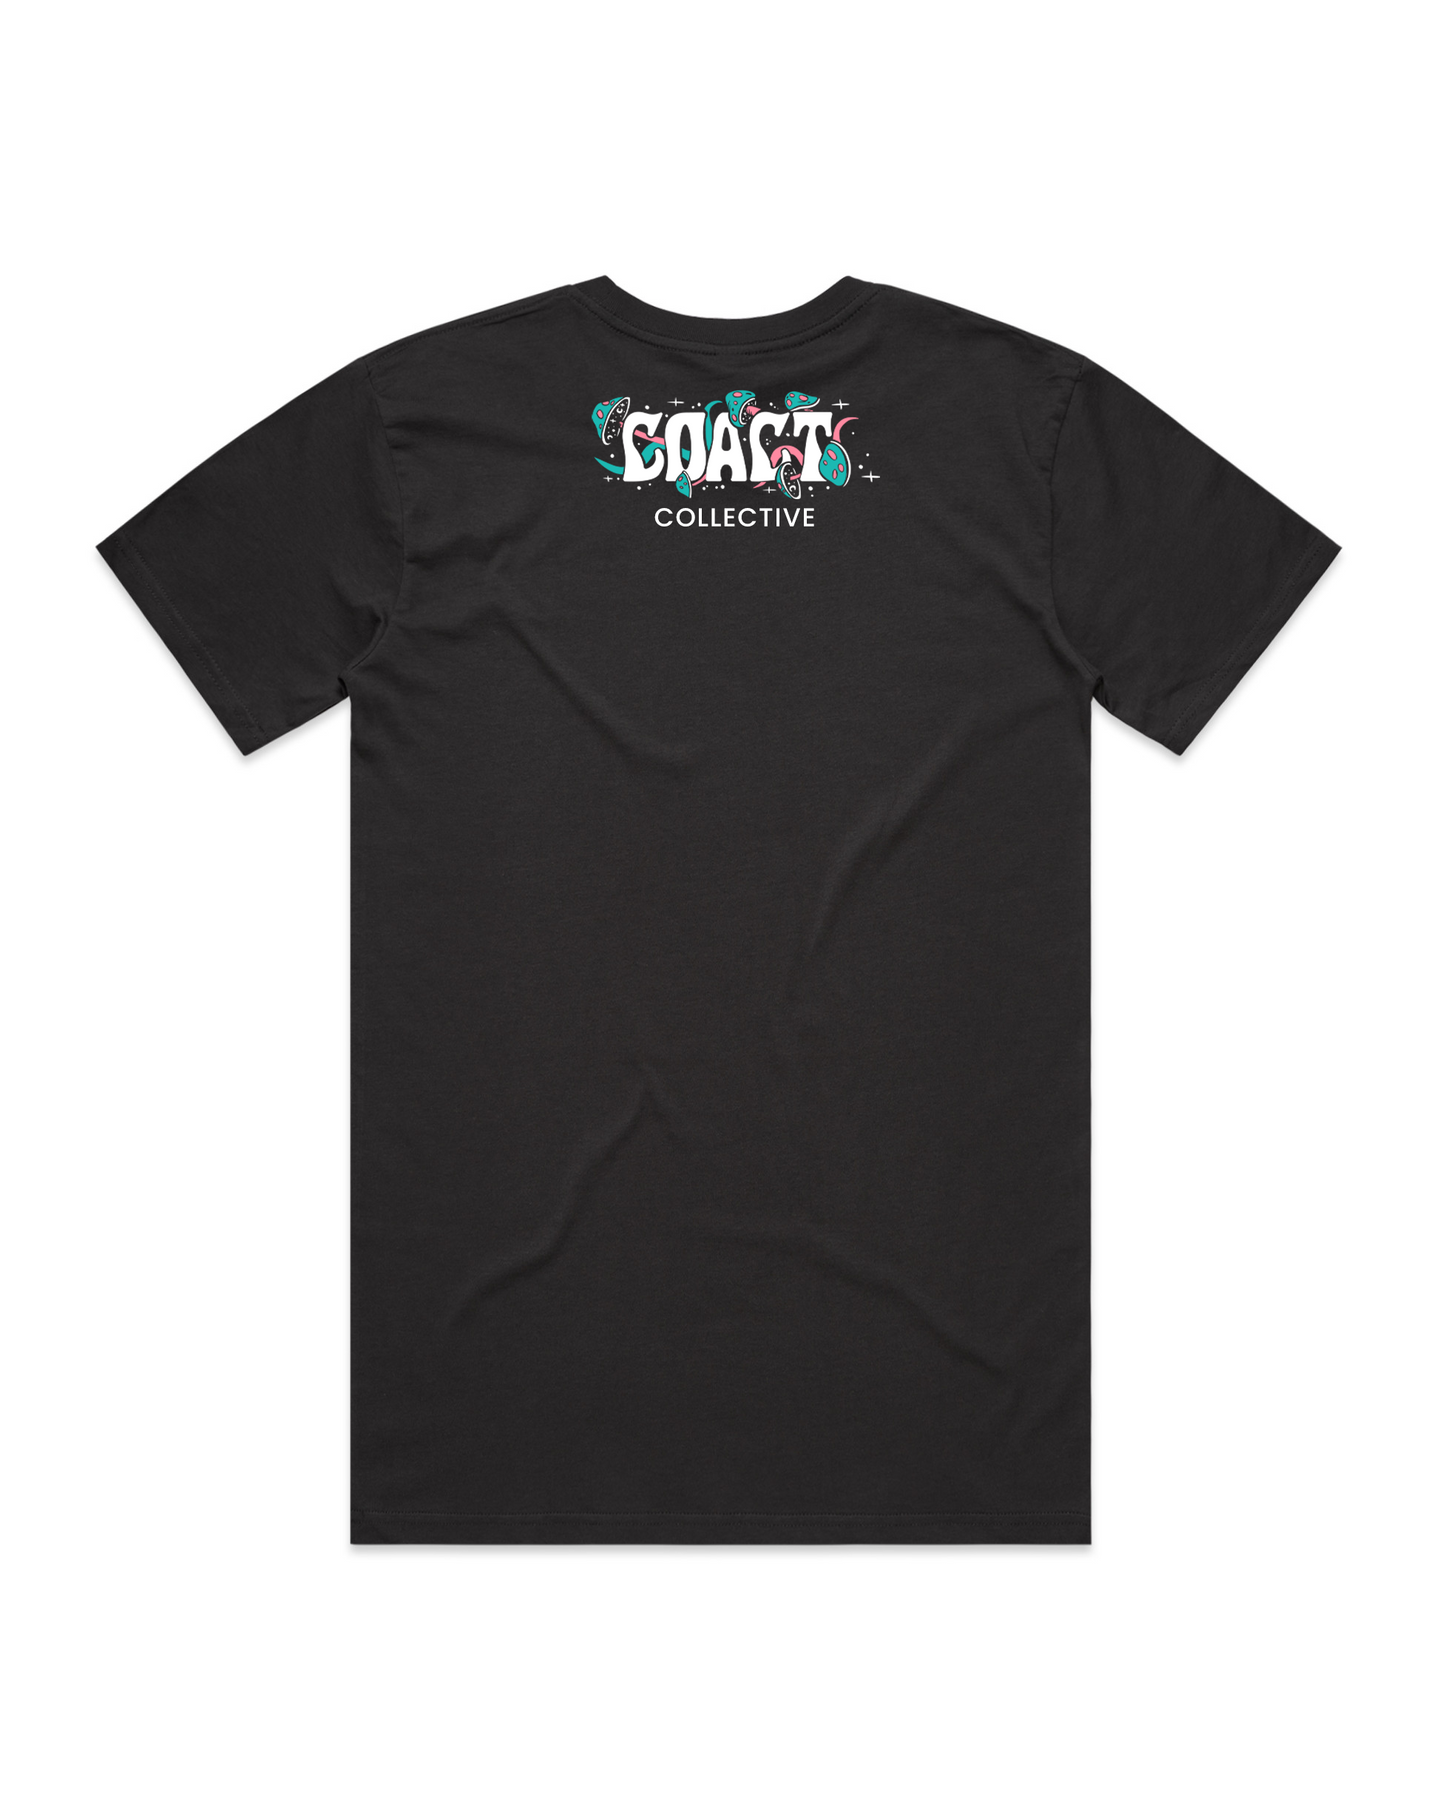 Coact Collective